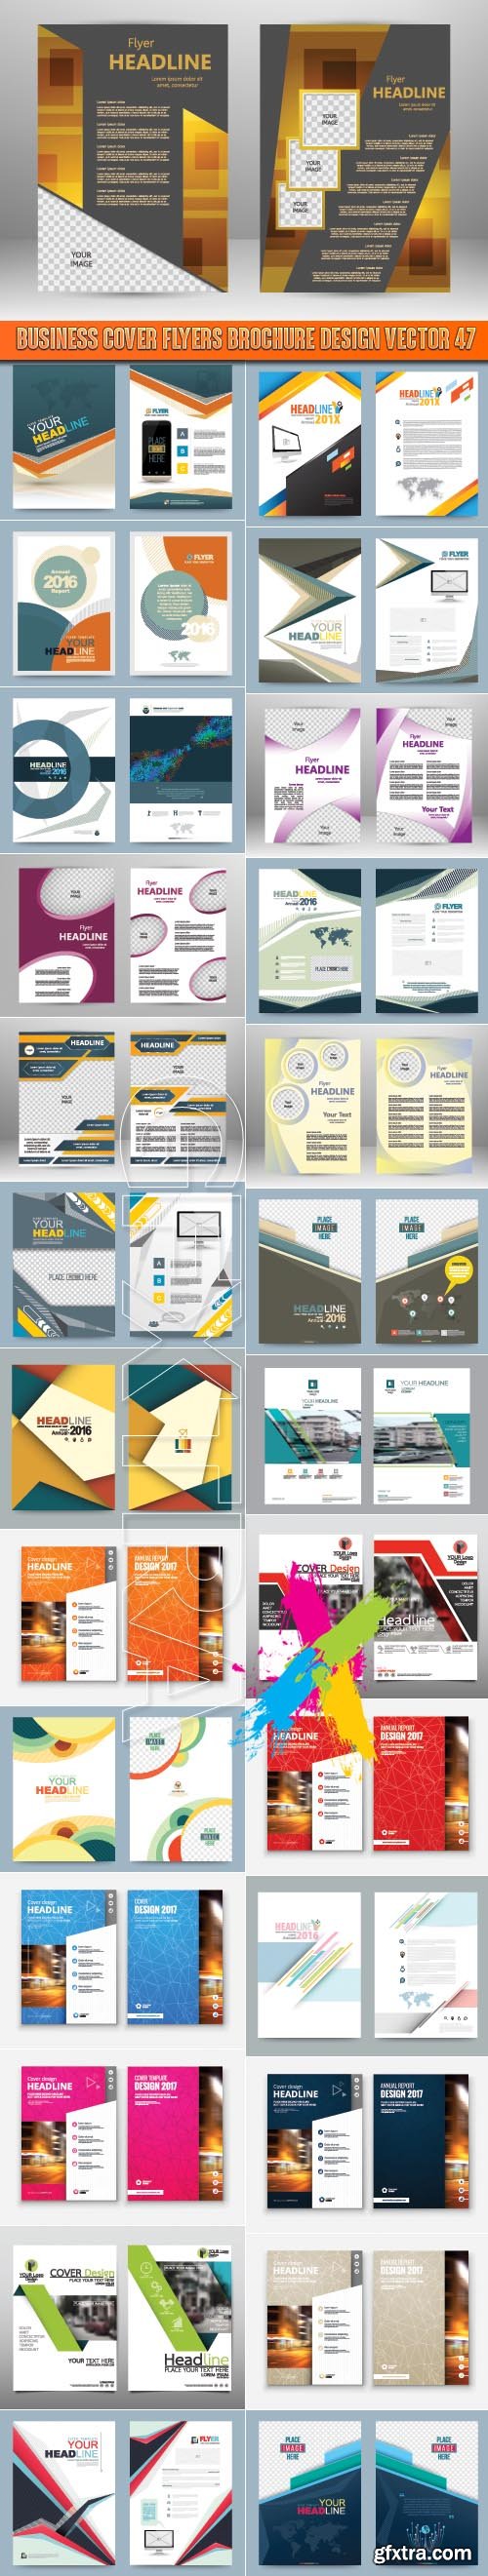 Business cover flyers brochure design vector 47